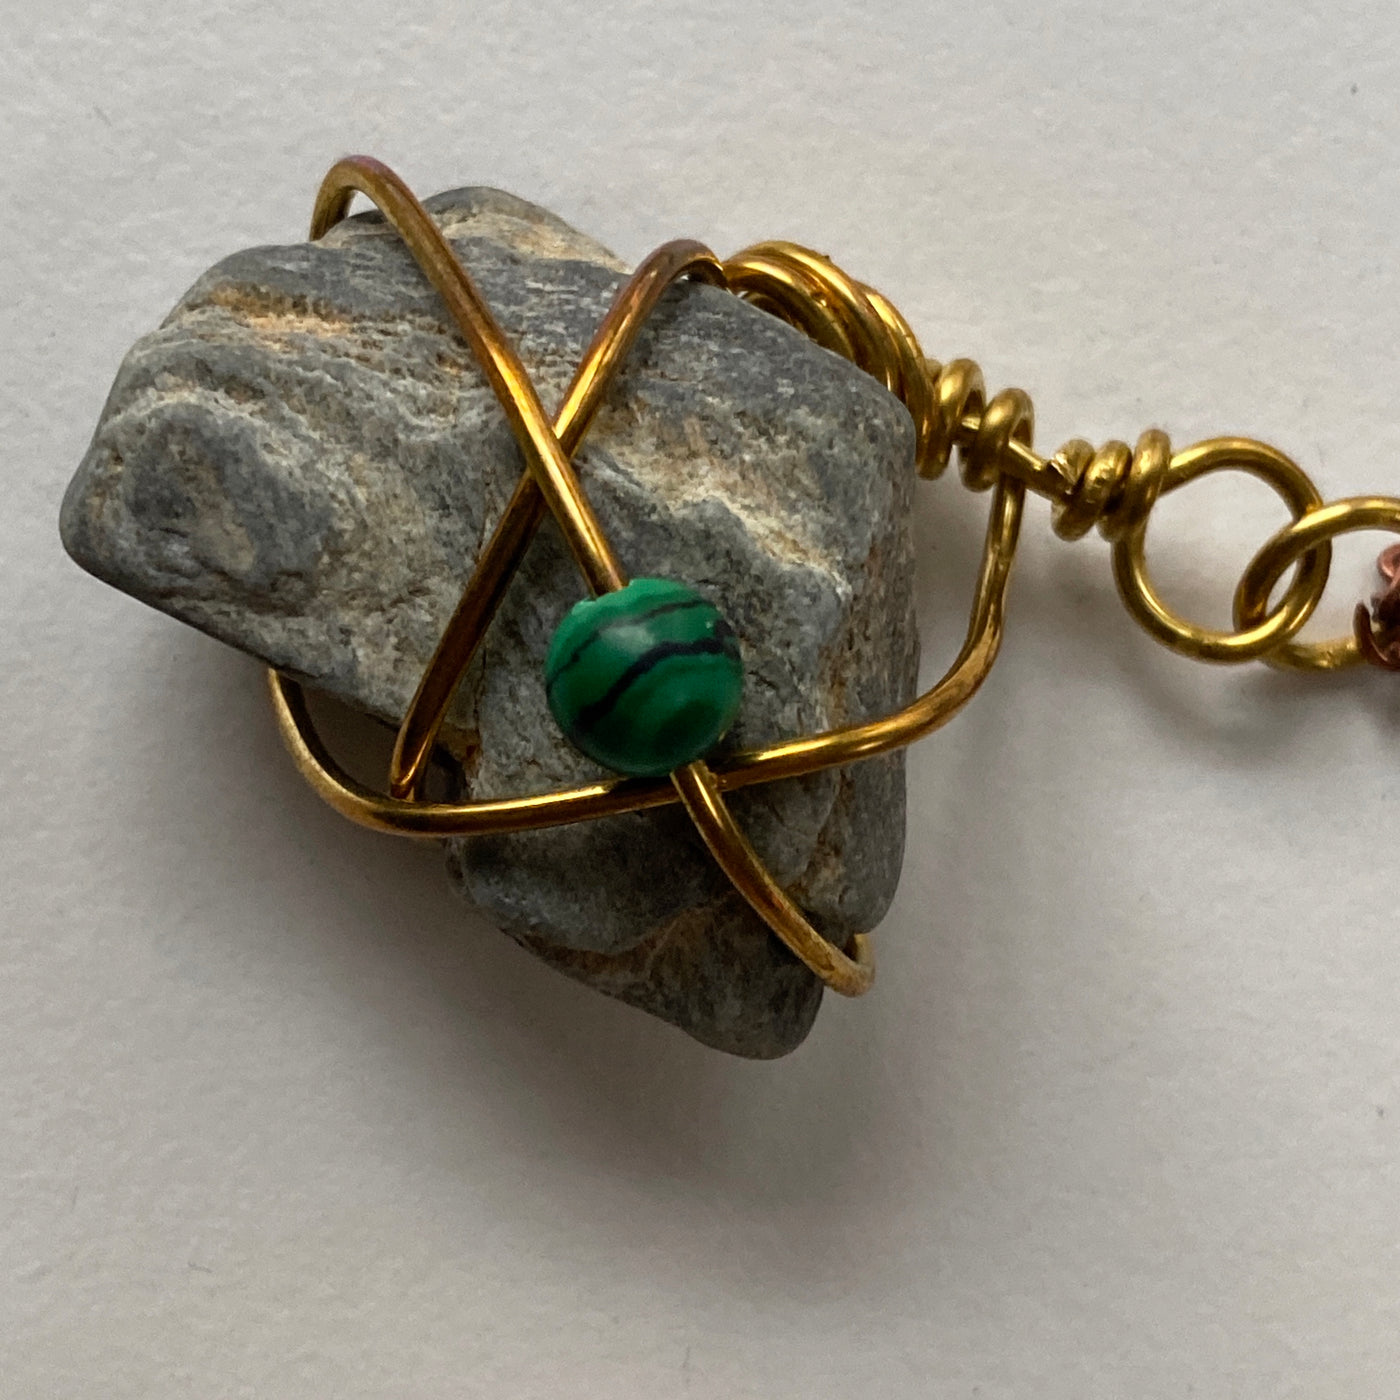 Medium pendant. Green natural stone, malachite and wire. Elbastones collection.